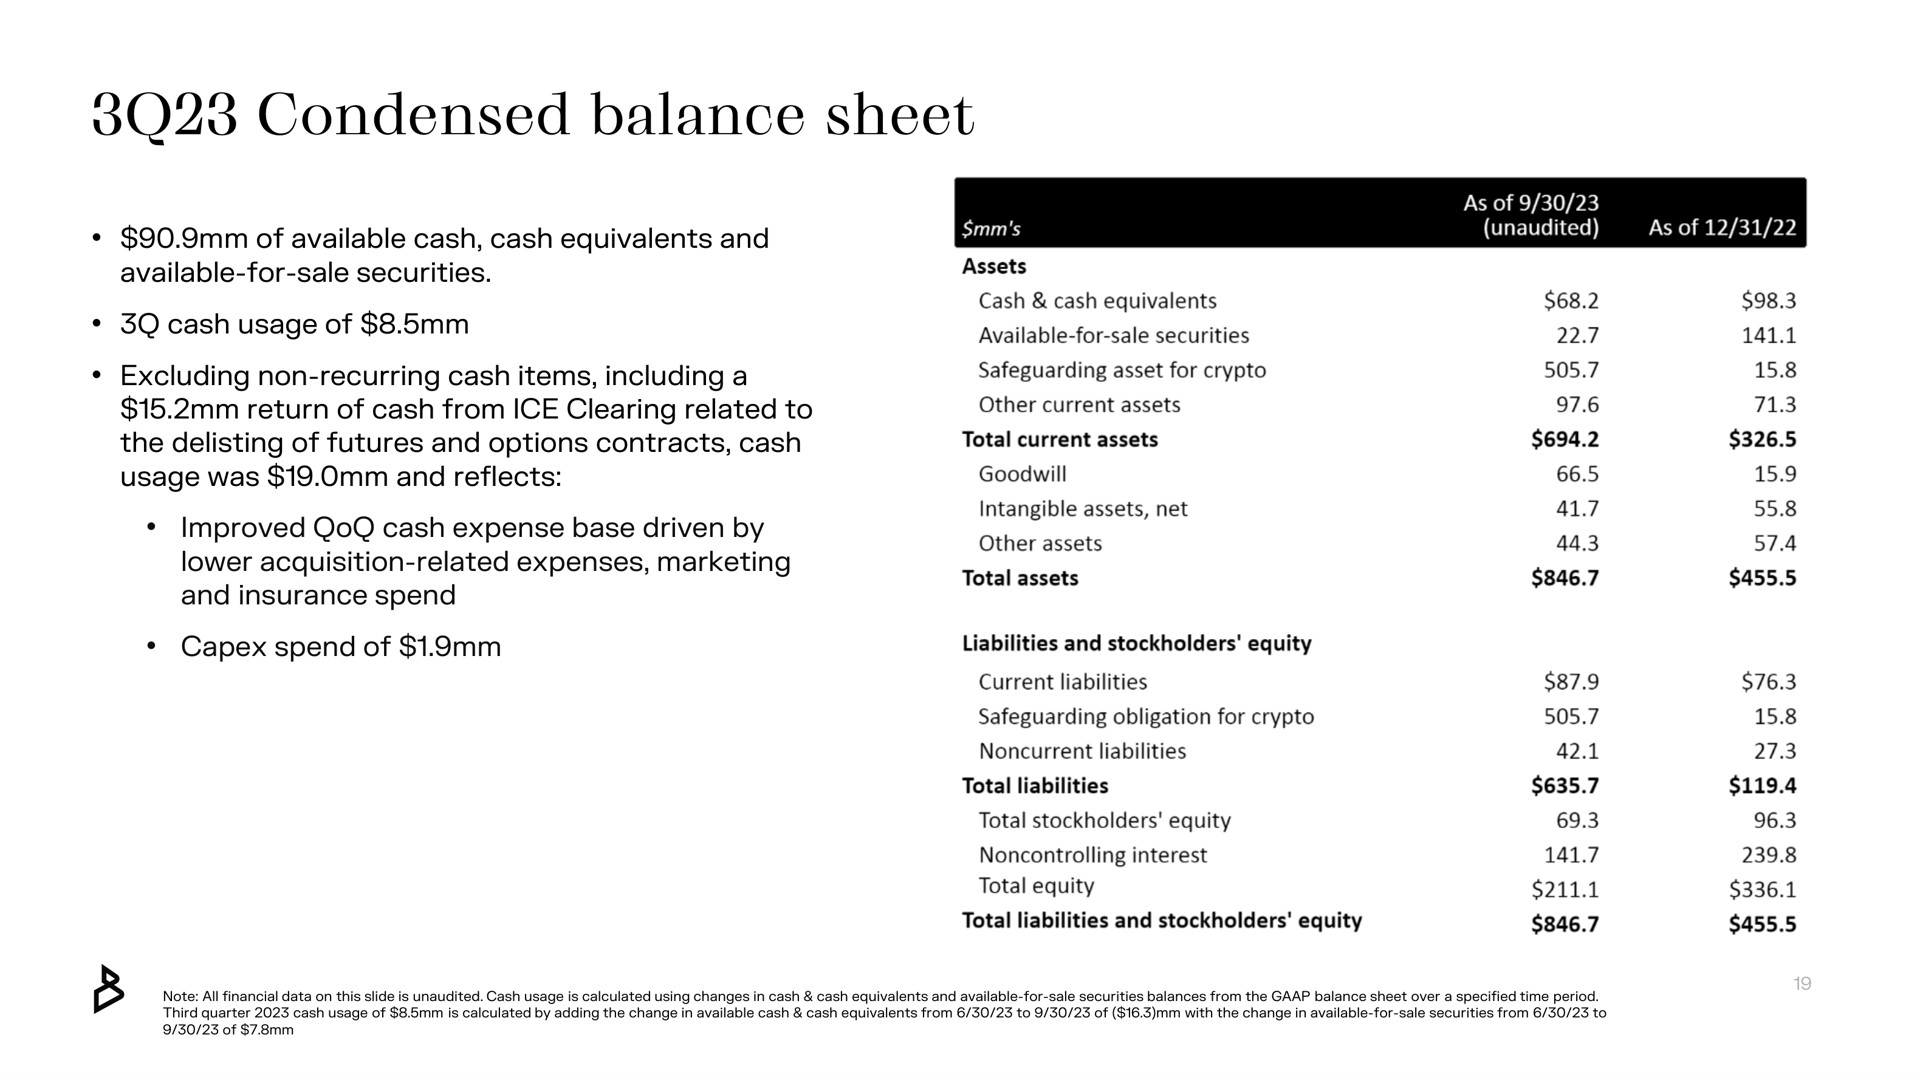 condensed balance sheet | Bakkt